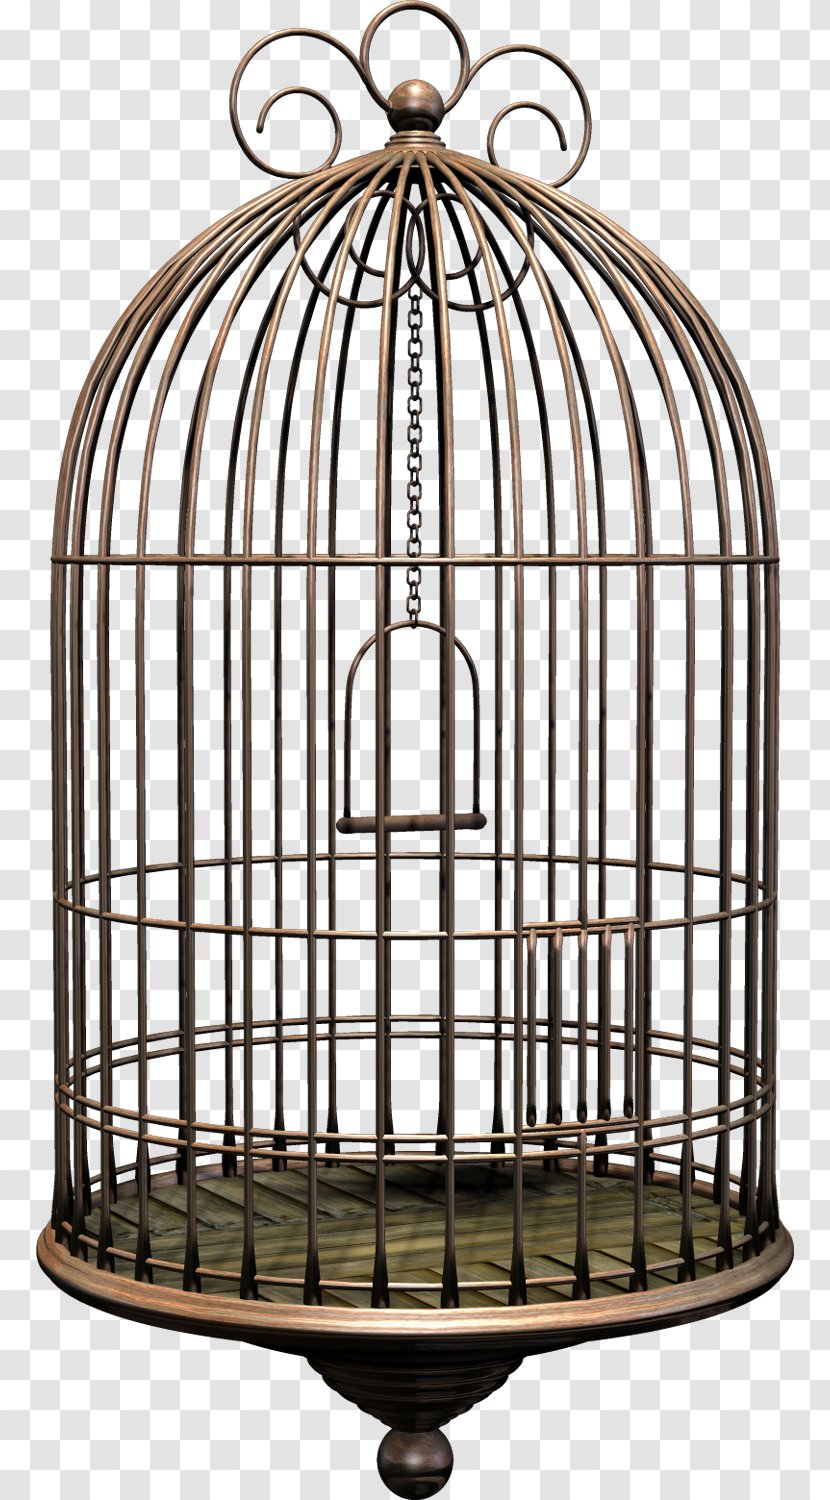 Birdcage Cockatiel - Bird Cage Transparent PNG